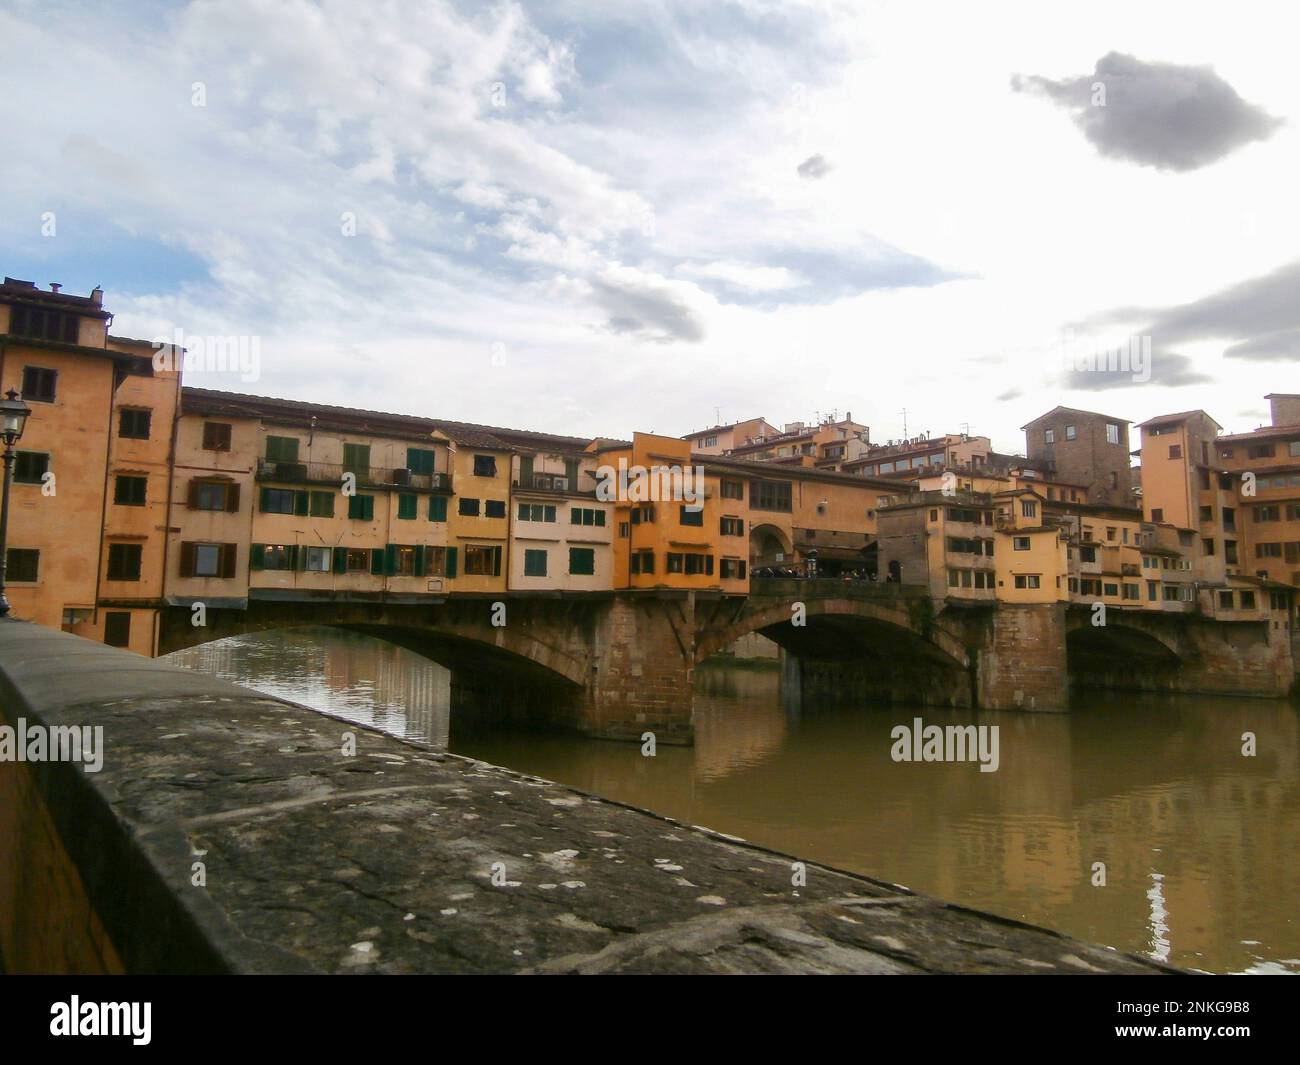 Famous ponte vecchio bridge over the Arno River in Florence, Italy Stock Photo